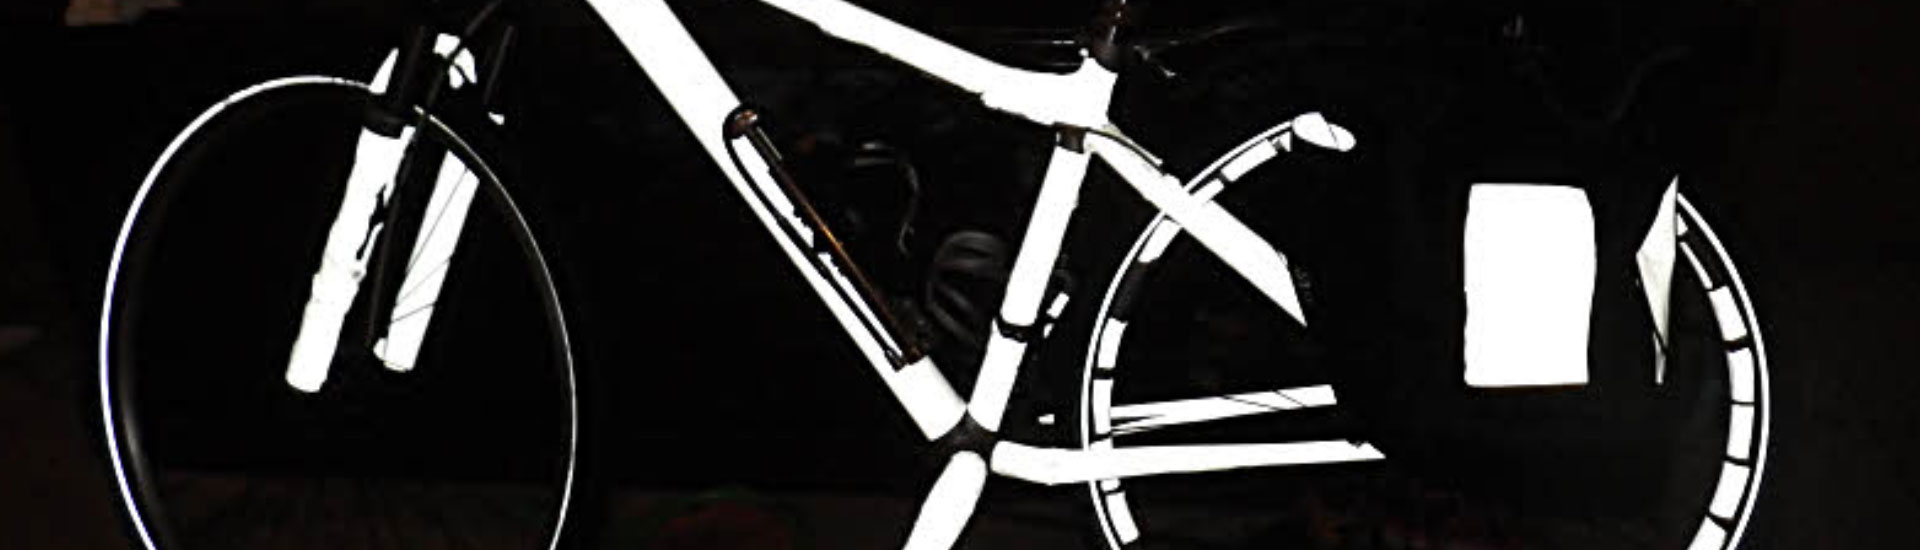 Reflective Bike Wraps